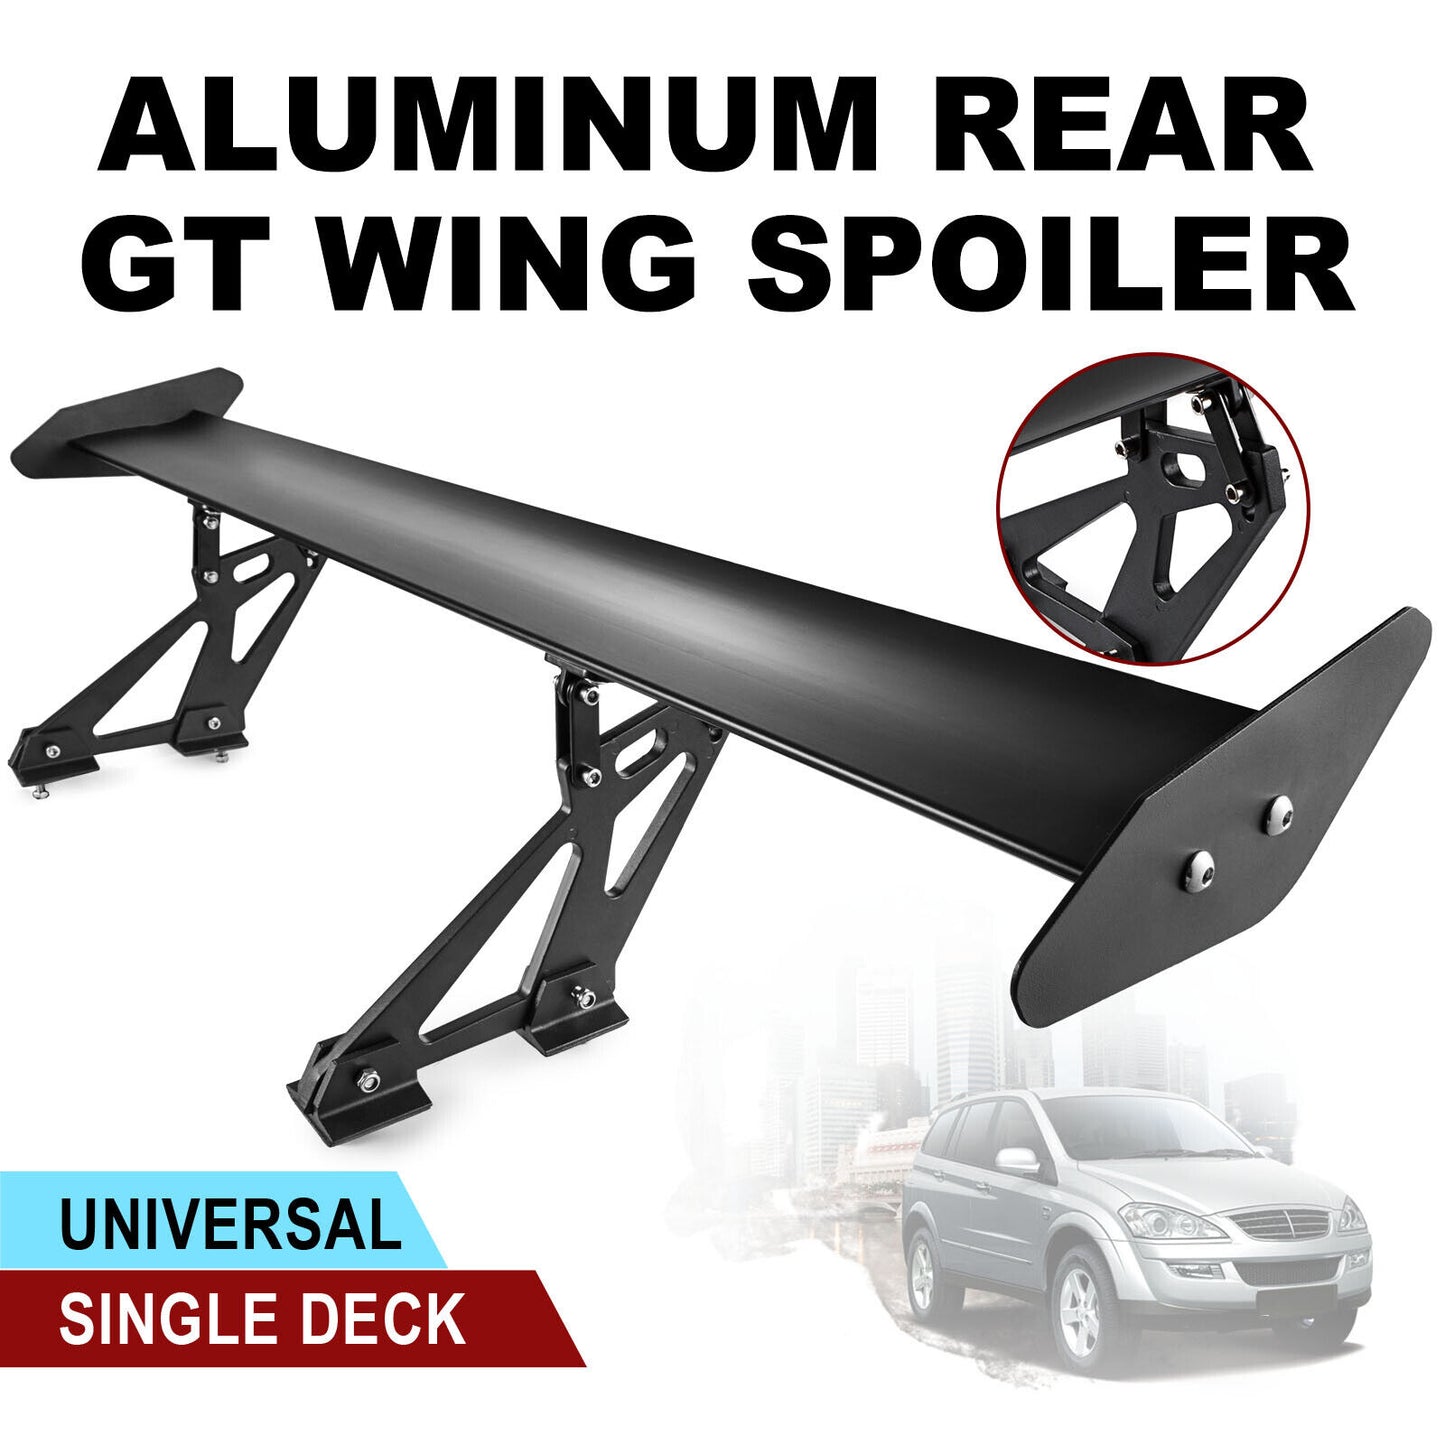 43.3" Rear GT Wing Spoiler Adjustable Angel Single-Deck Aluminum Spoiler